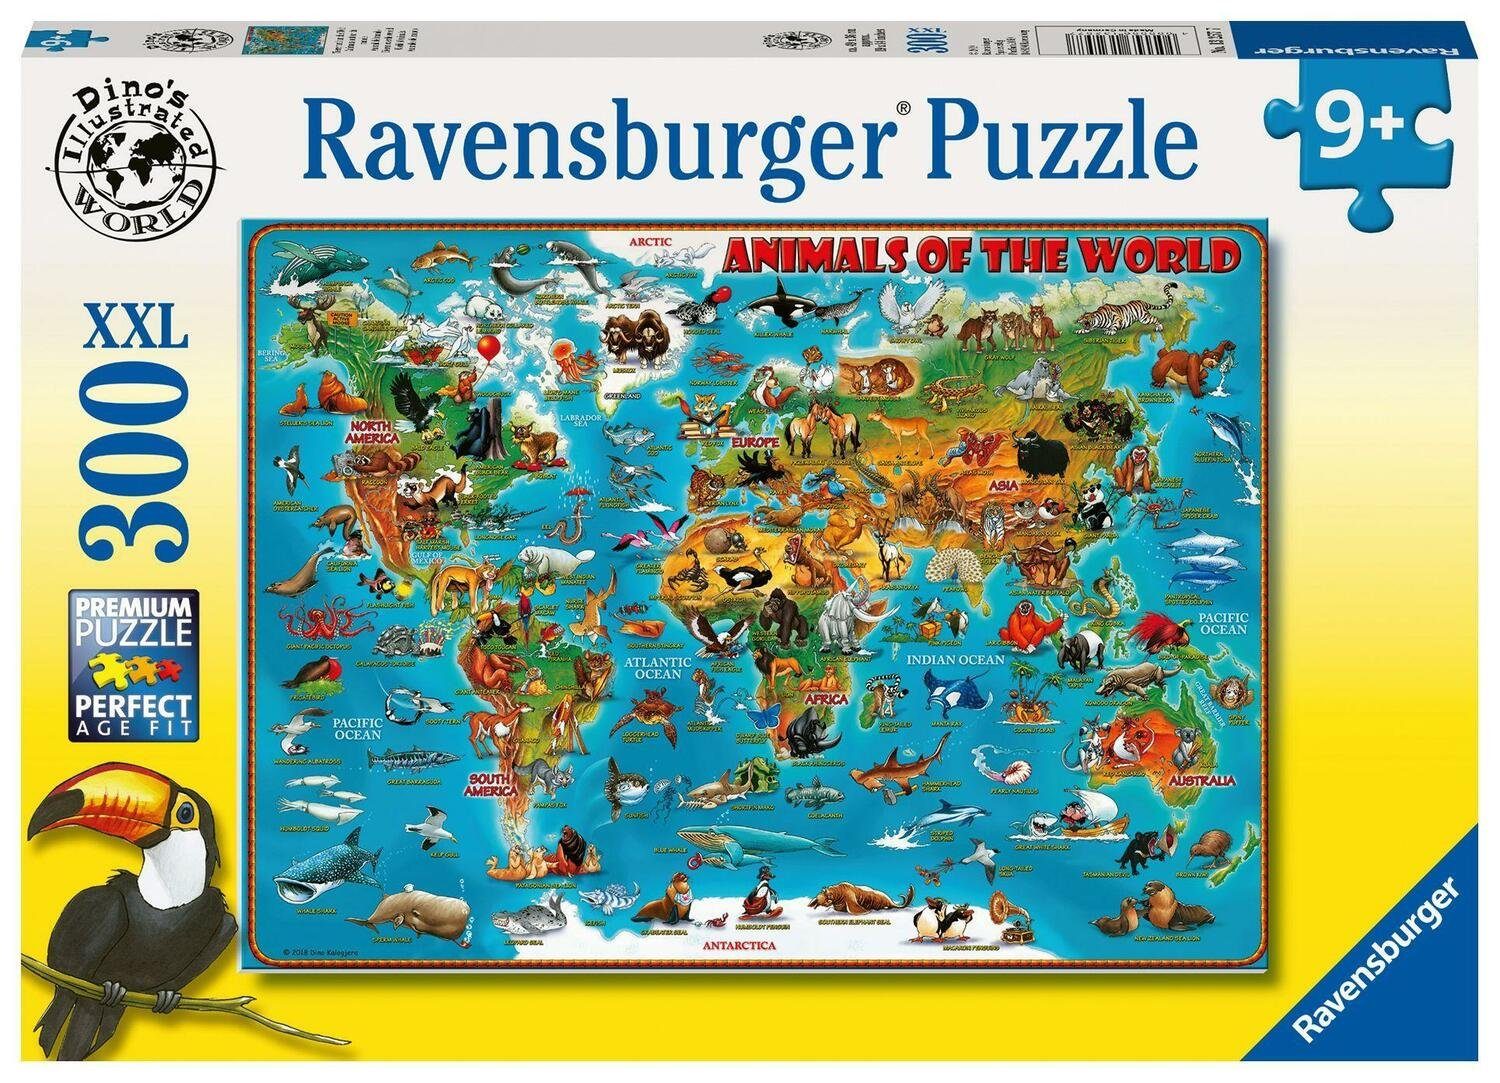 Ravensburger Puzzle Tiere rund um die Welt 300p, 200 Puzzleteile | Puzzle